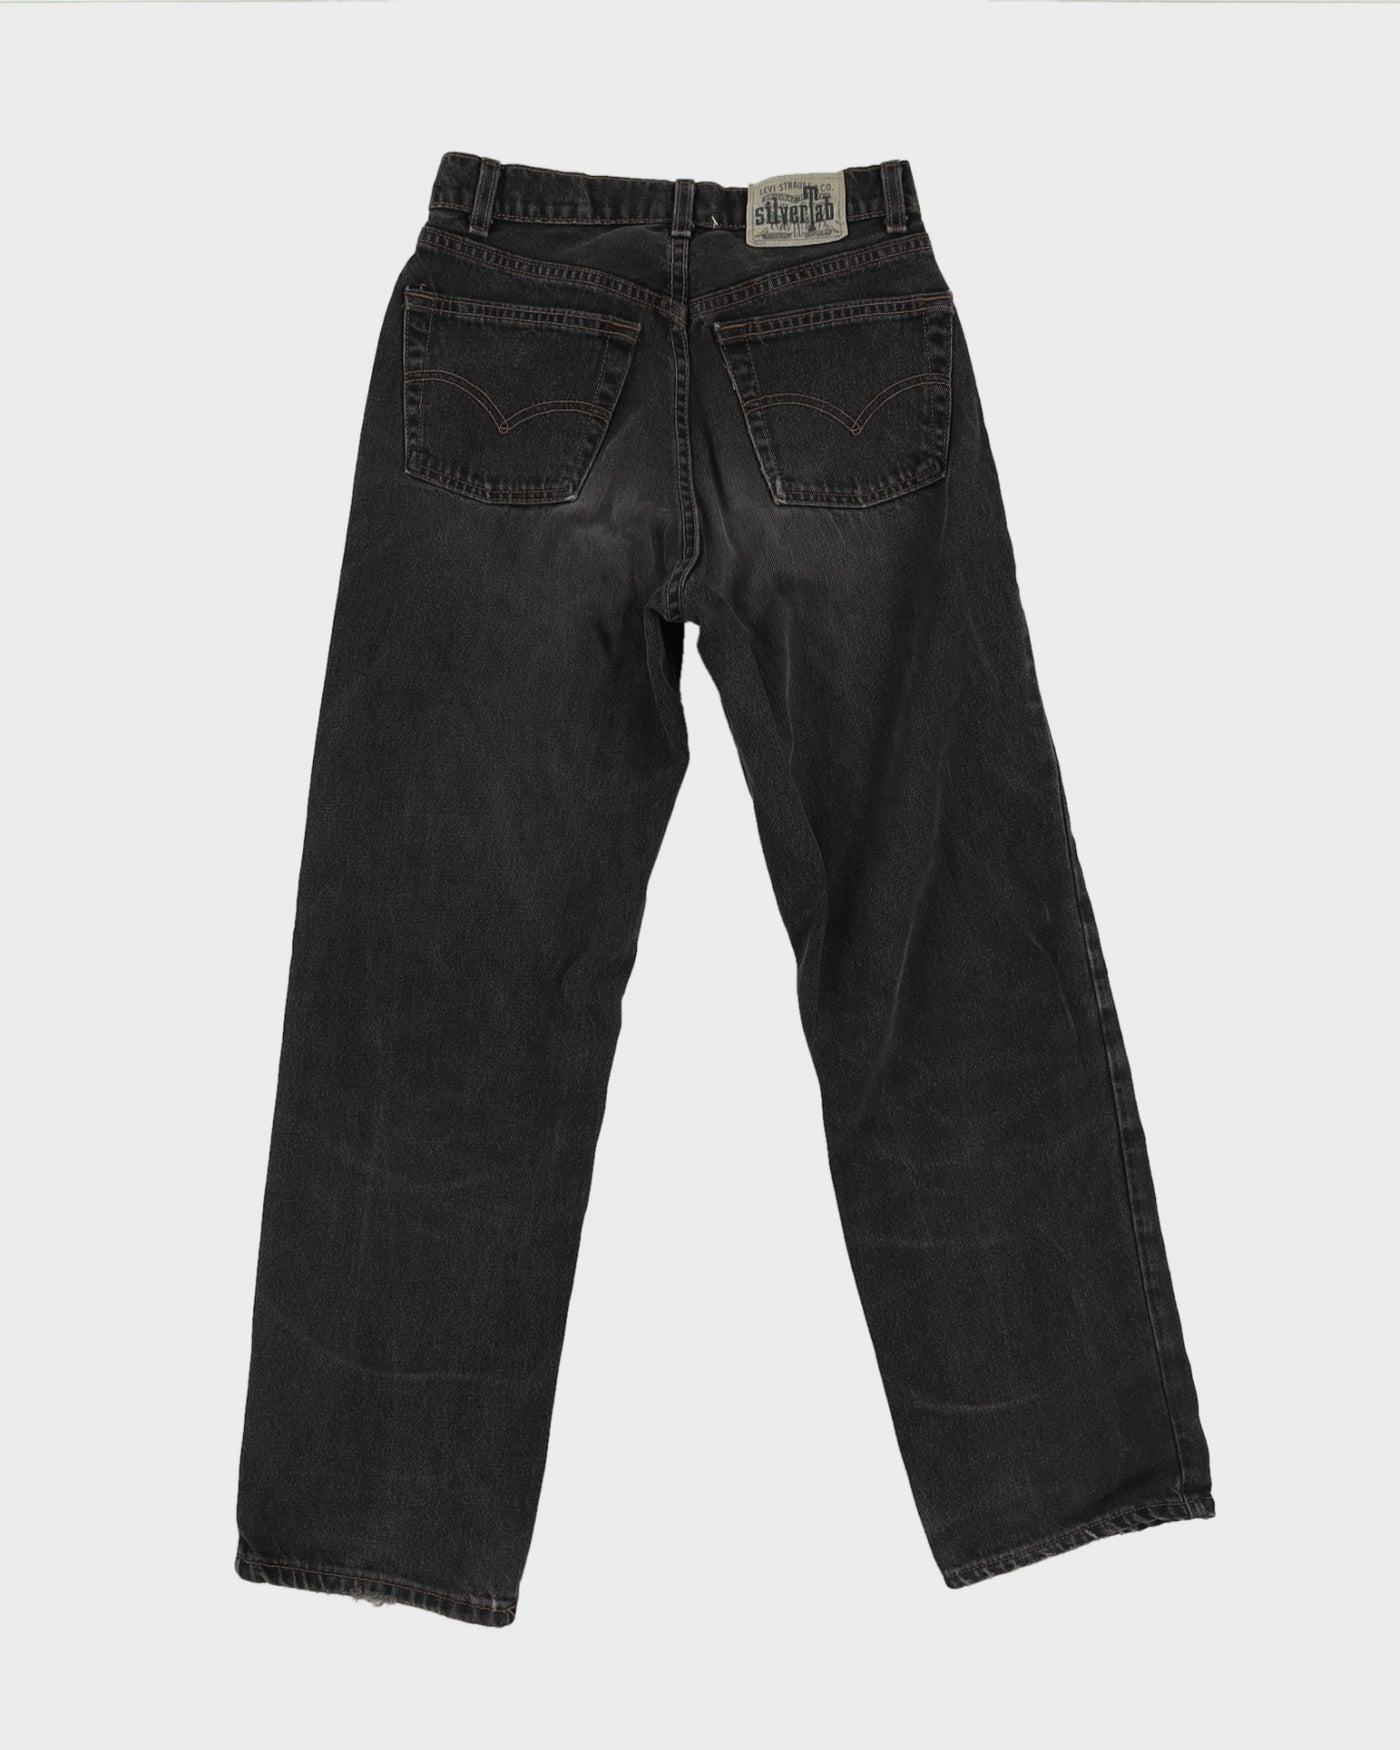 Vintage 80s Levi's SilverTab Black Jeans - W28 L30